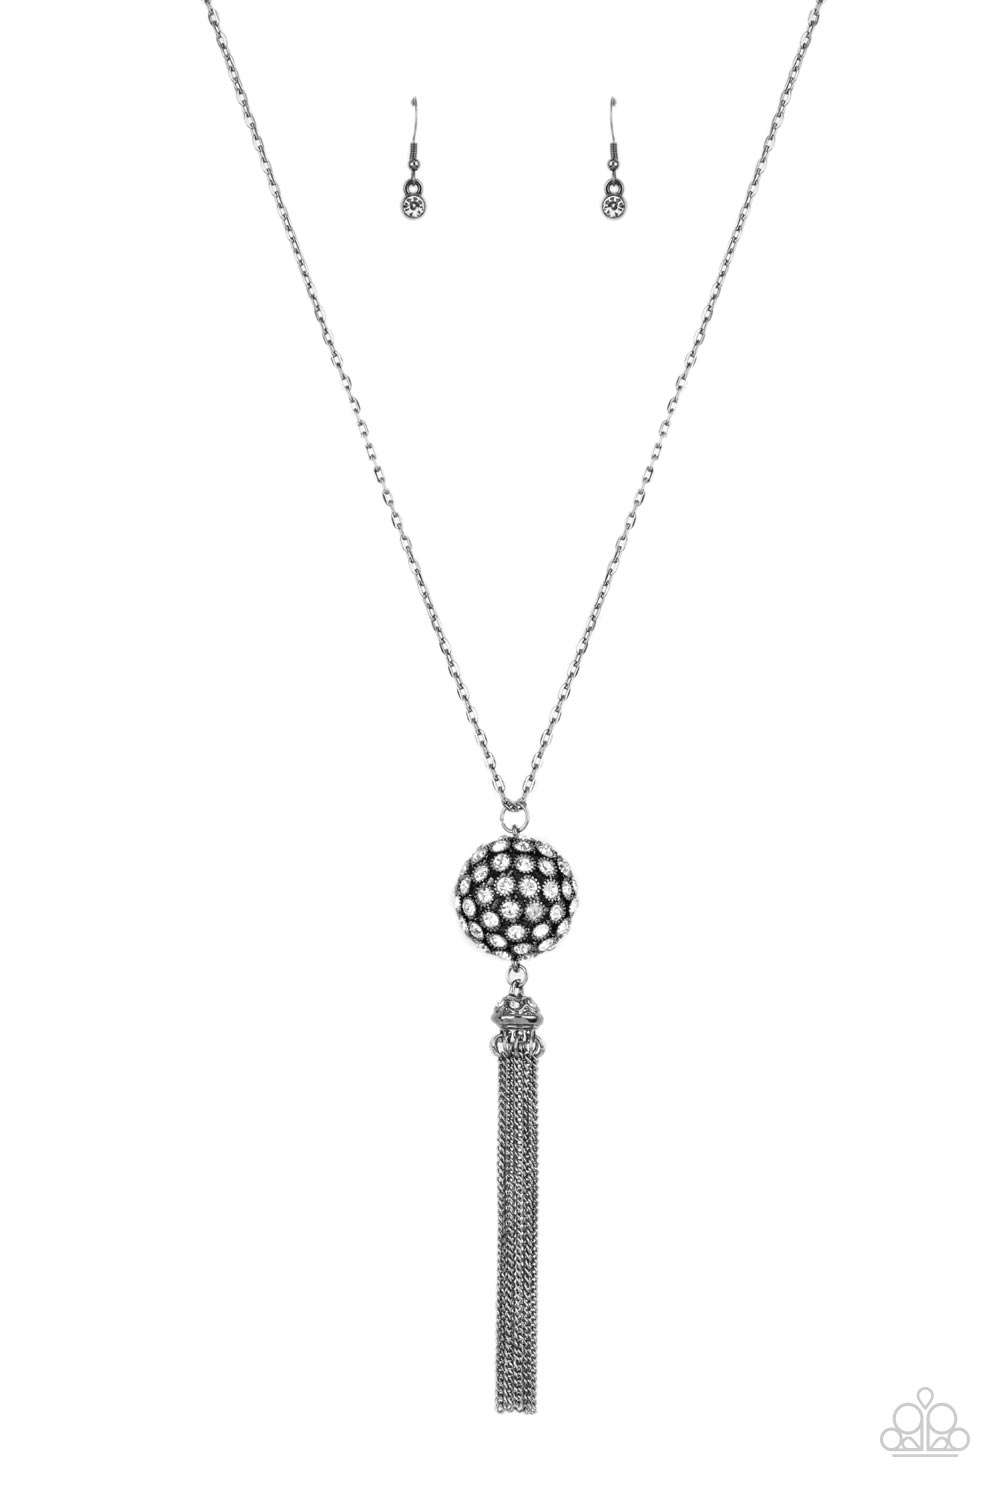 Rhinestone Revolution Necklace (White, Black)